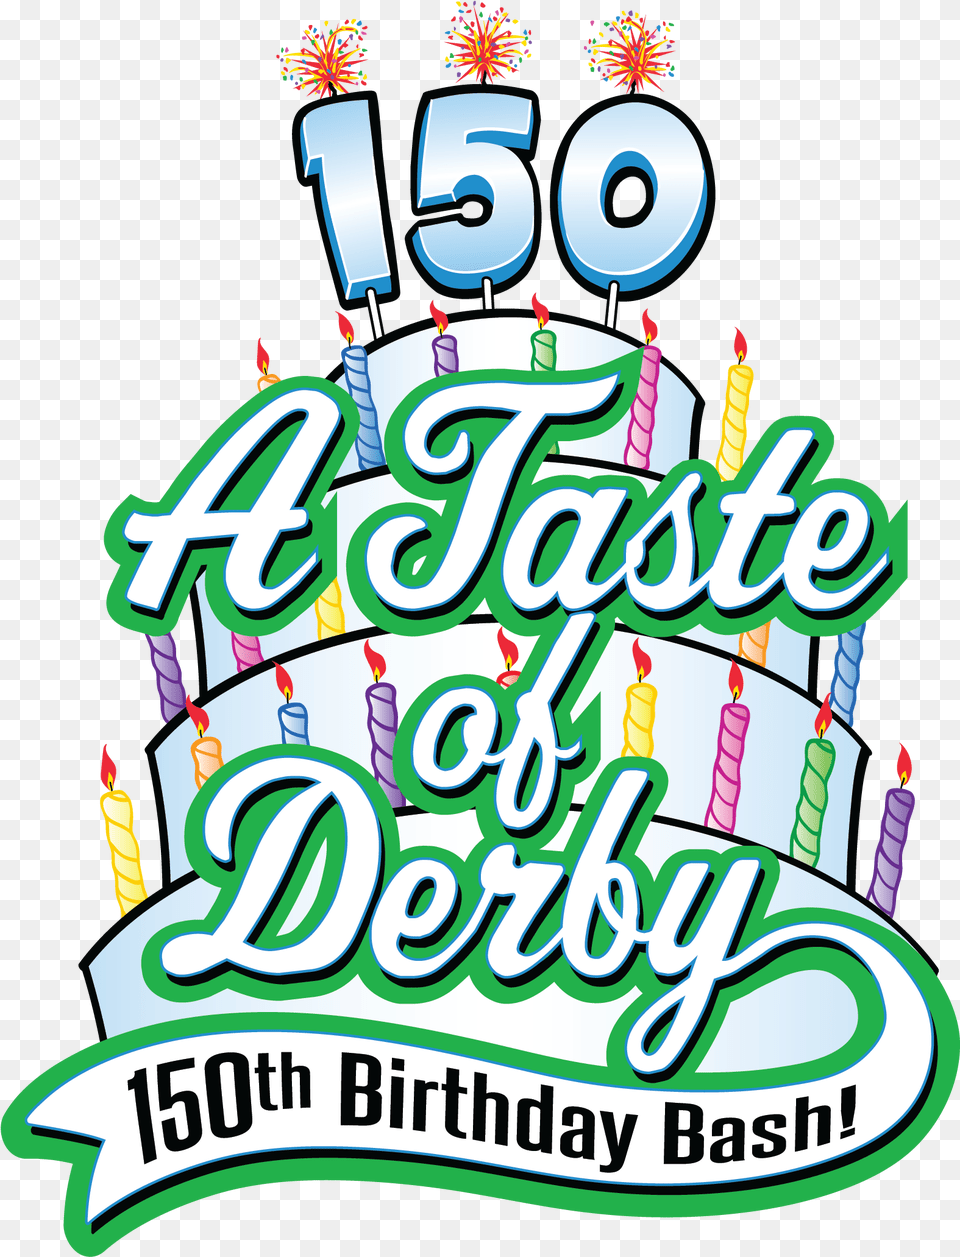 A Taste Of Derby 150th Birthday Bash Presented By Capitol Aviators, Birthday Cake, Cake, Cream, Dessert Png